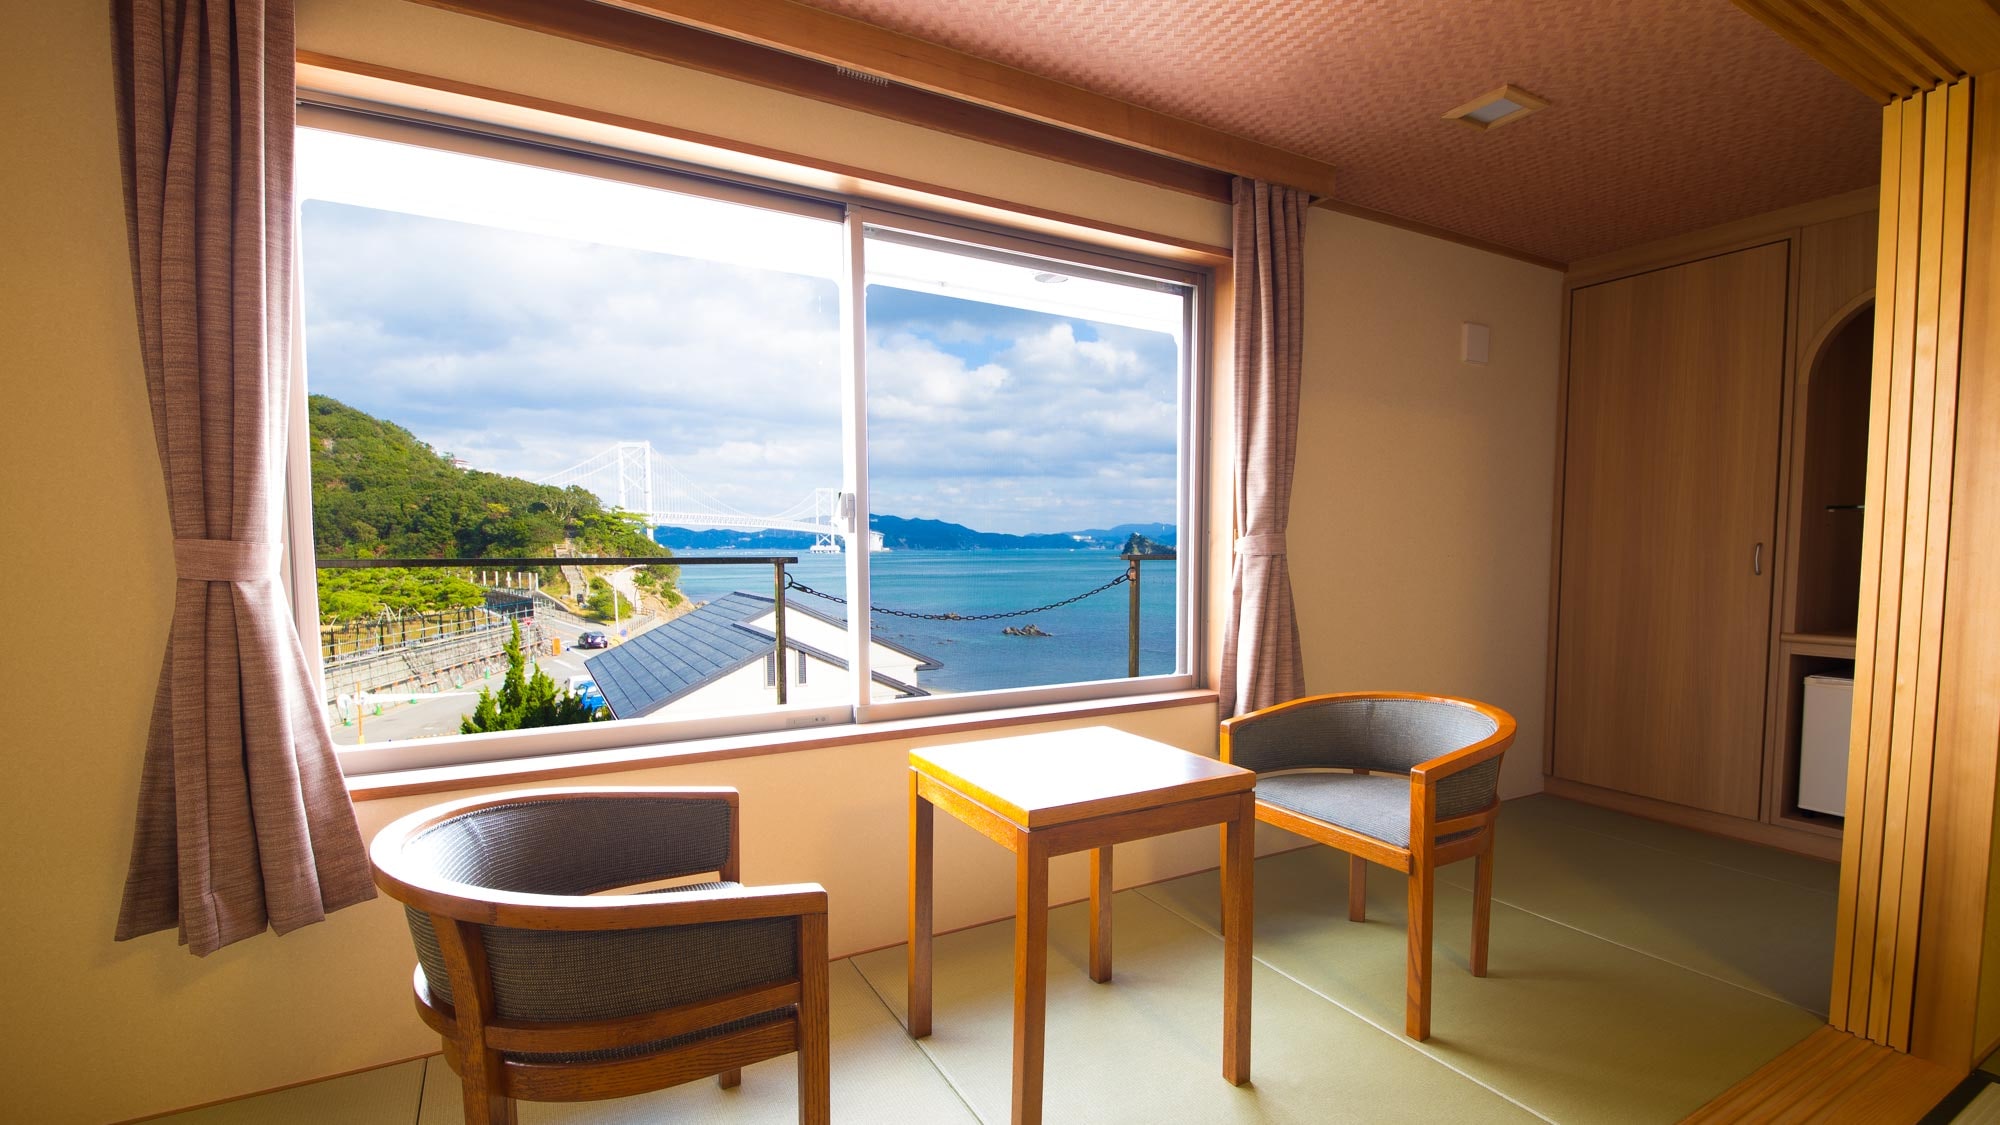 Ocean view Japanese-style room 10 tatami mats ☆ No smoking